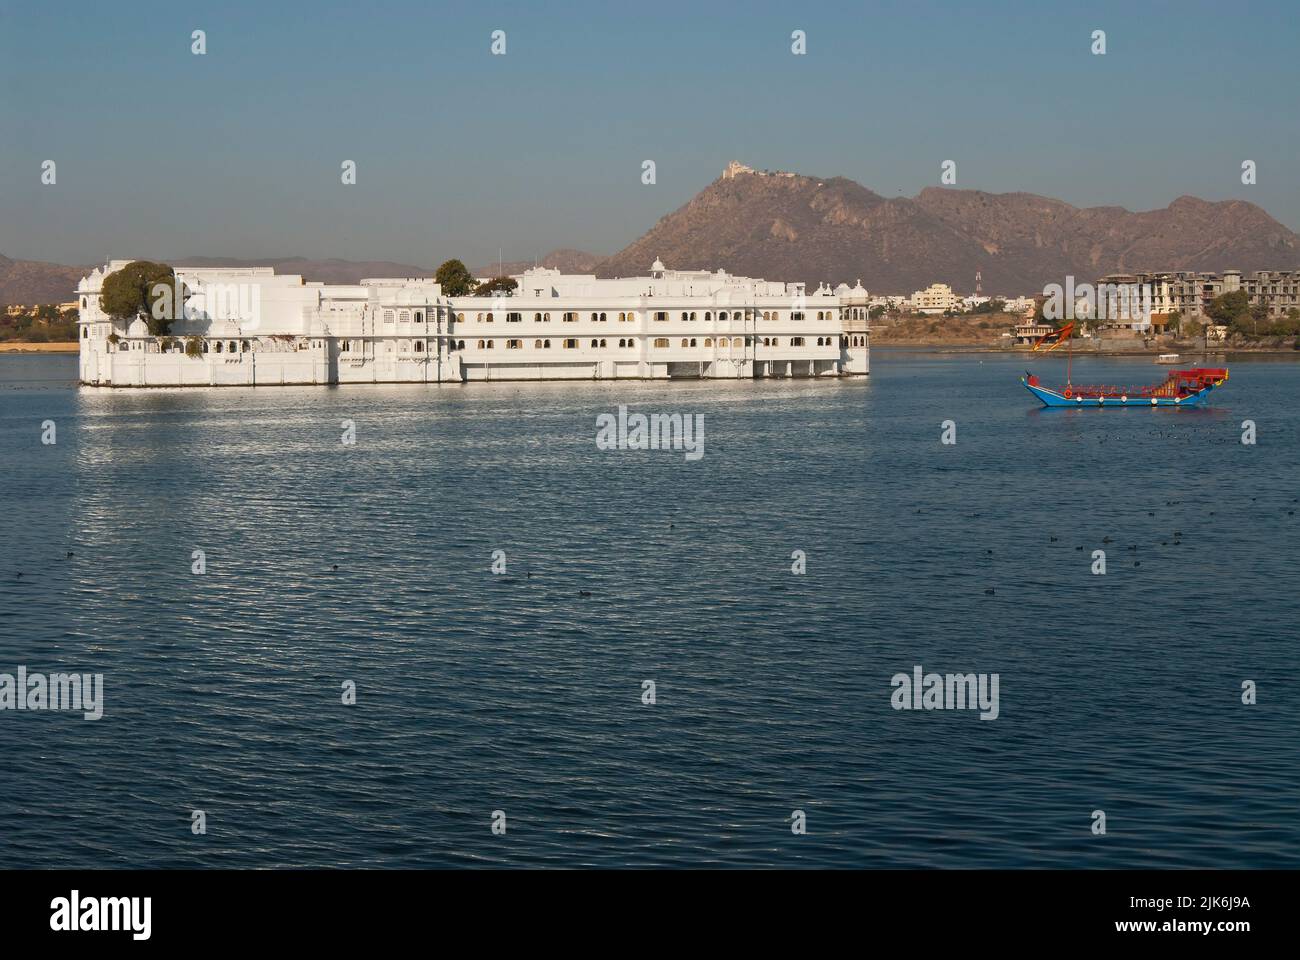 Taj lake palace,  Lake Pichola, Udaipur, Rajasthan state of India Stock Photo